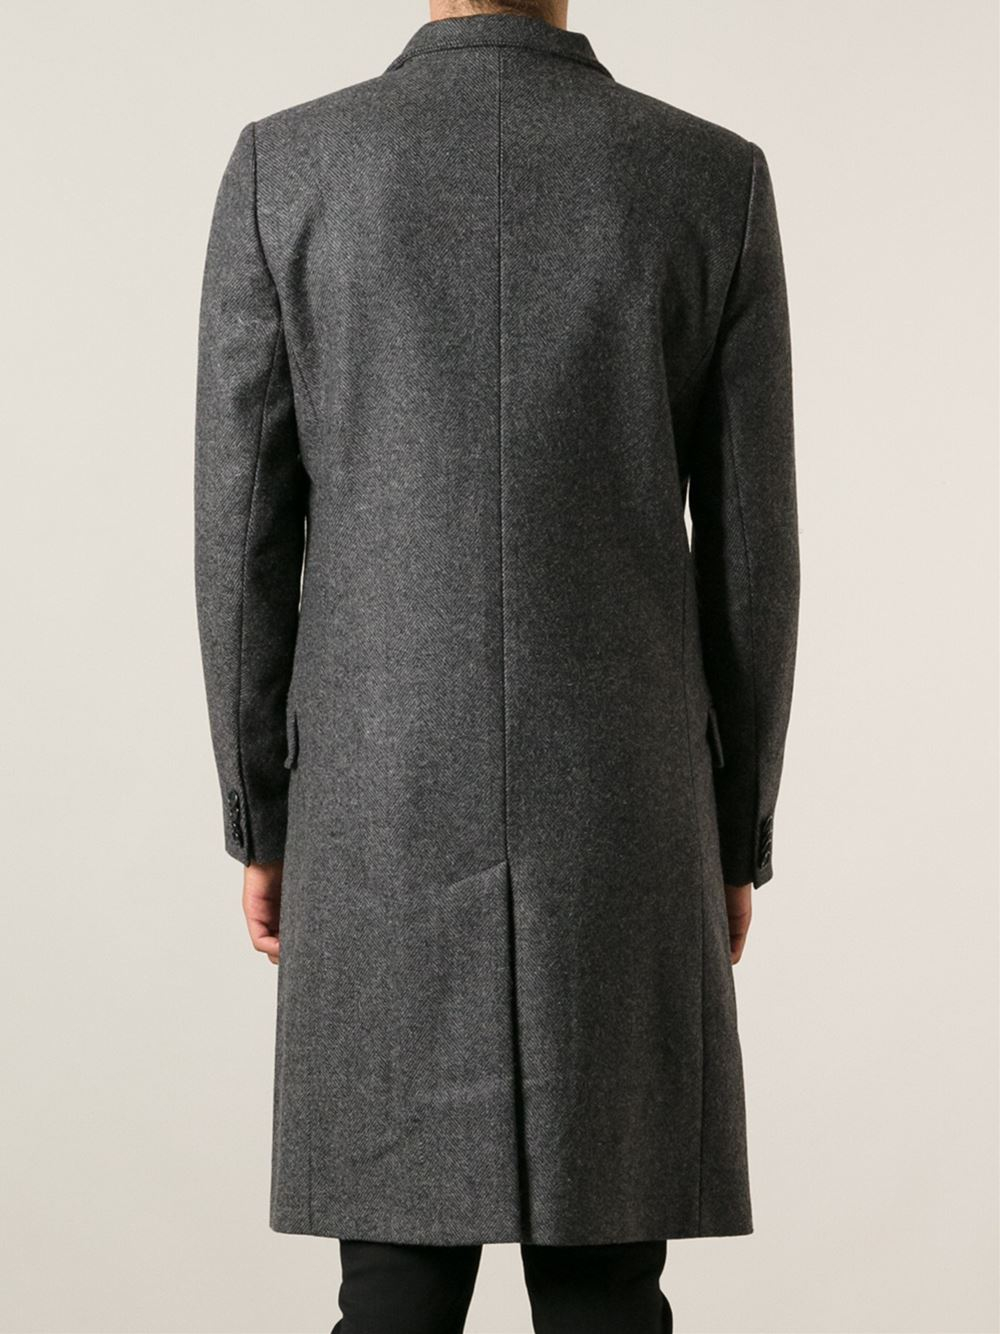 Lyst - DIESEL Herringbone Pattern Funnel Collar Coat in Gray for Men